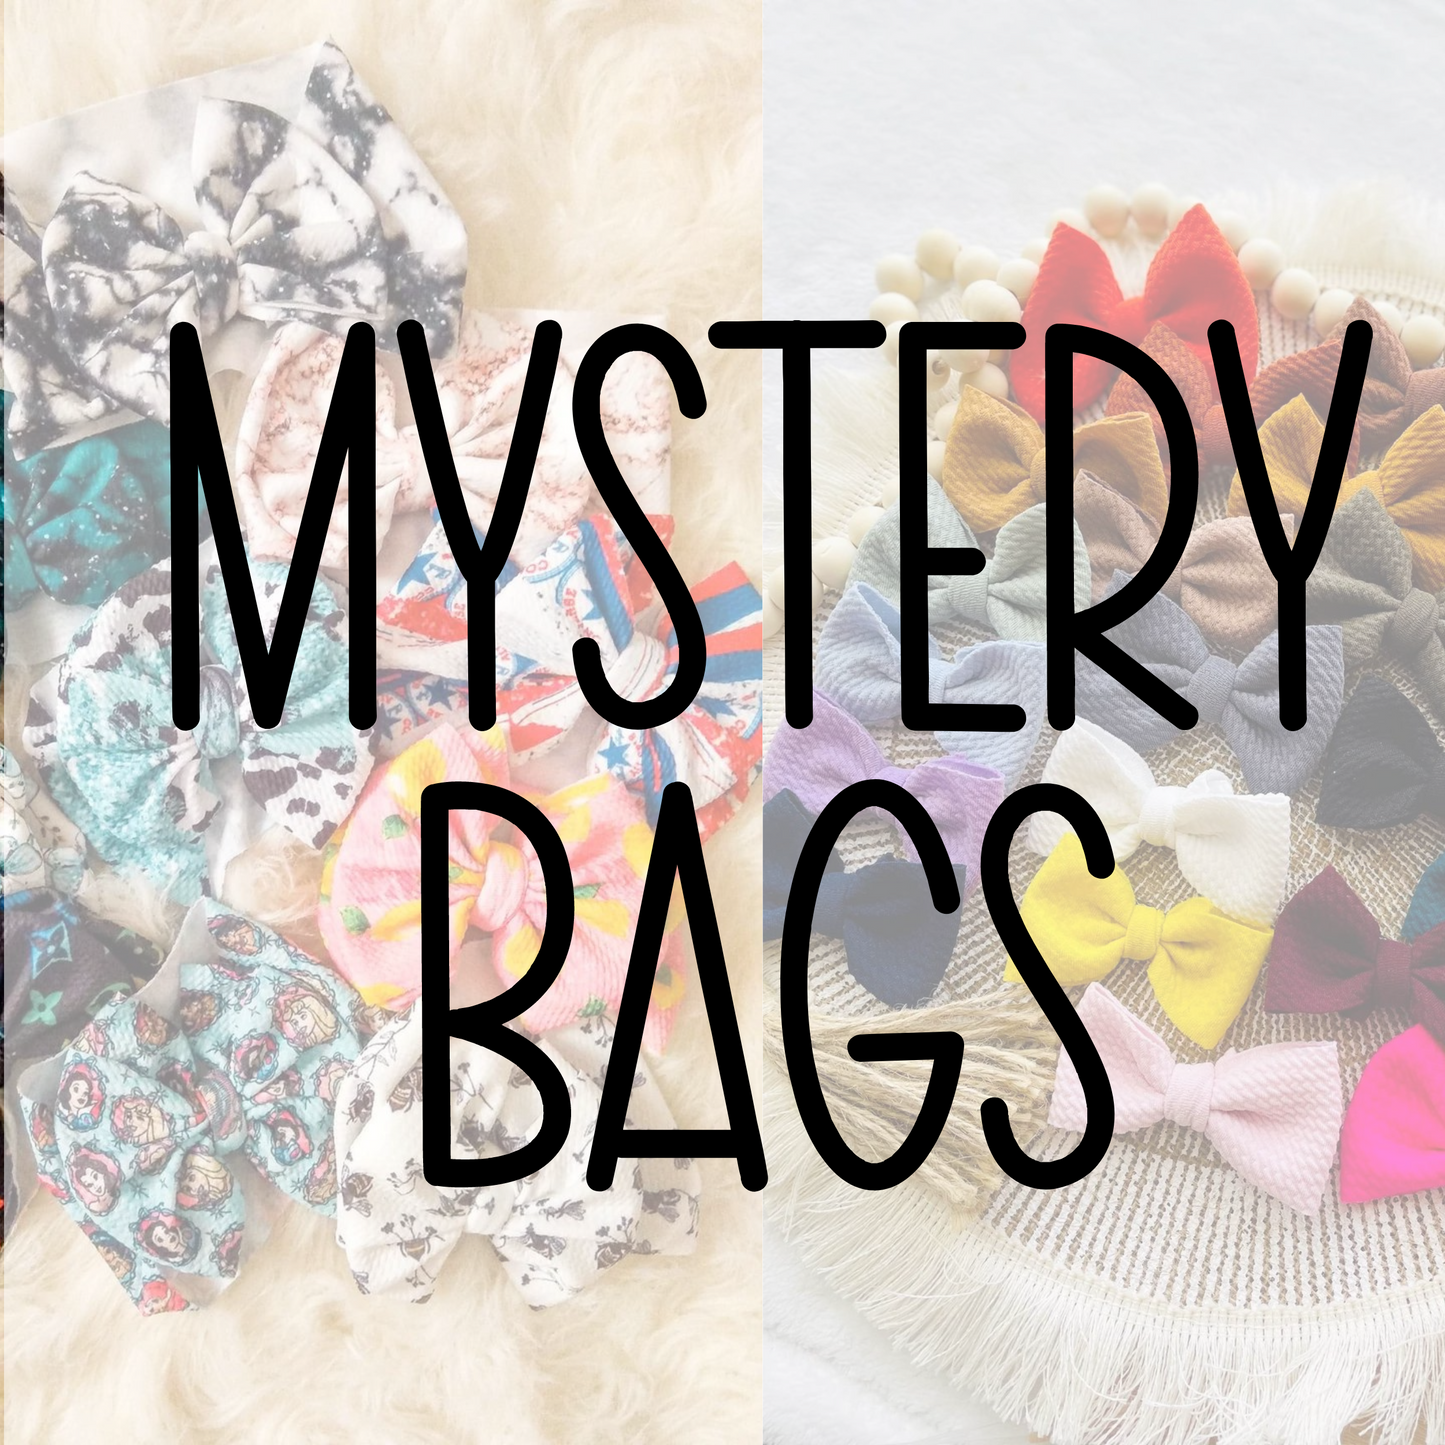 MYSTERY BAG